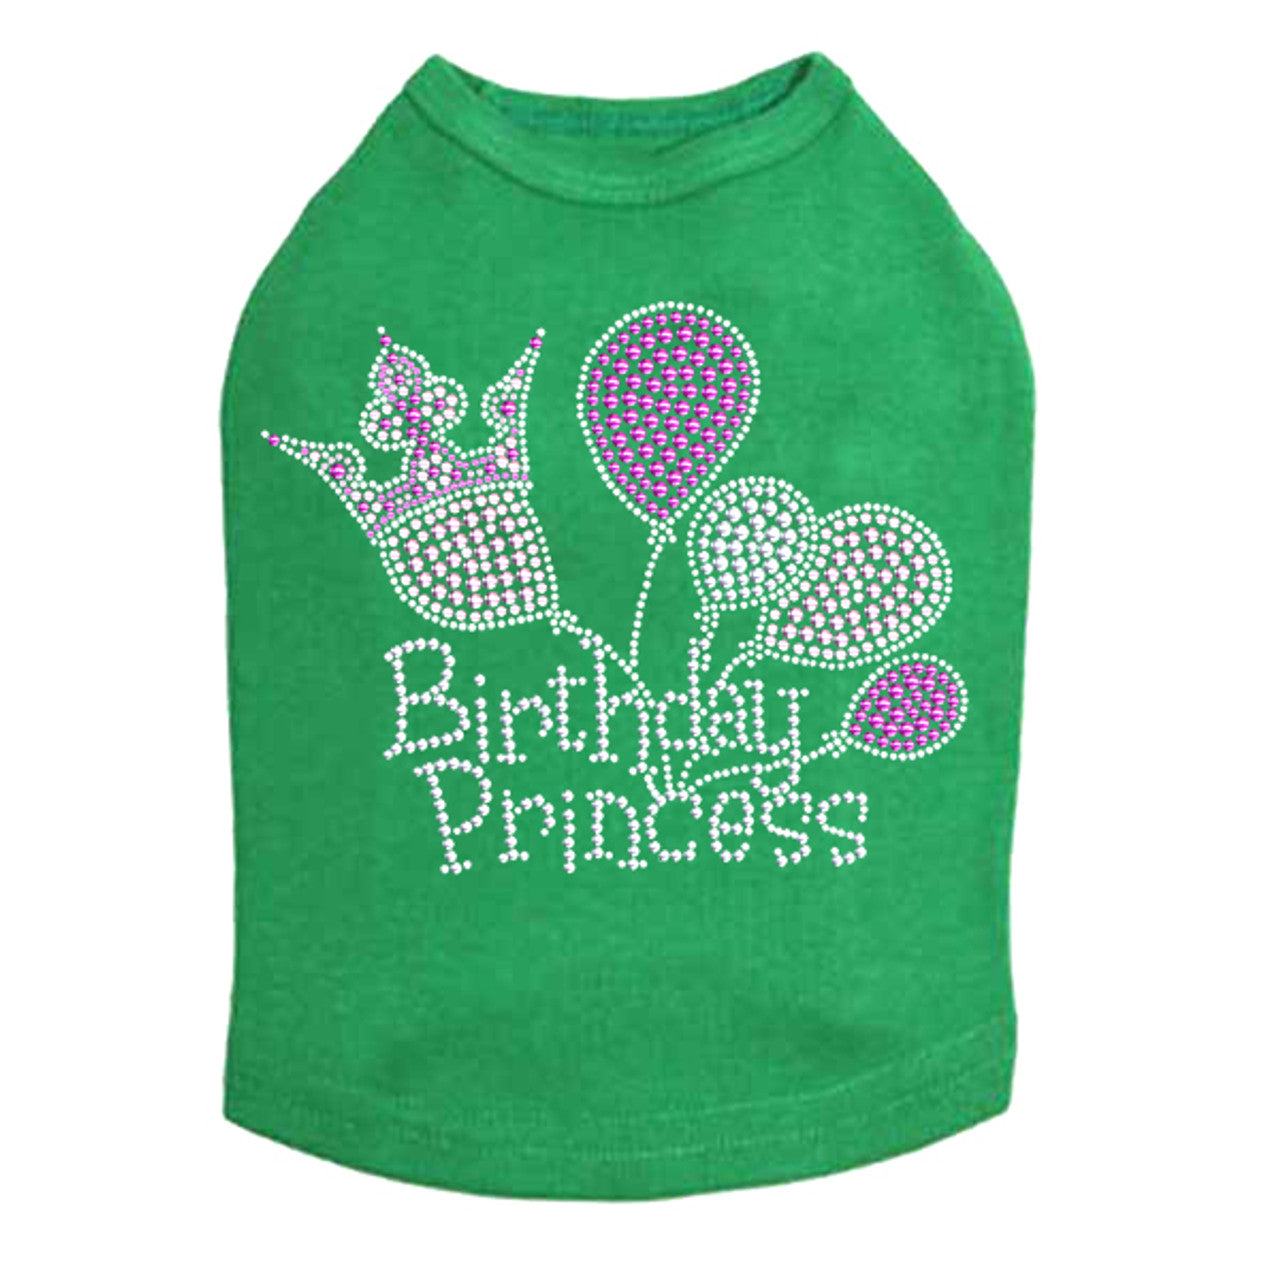 Birthday Princess  - Dog Tank